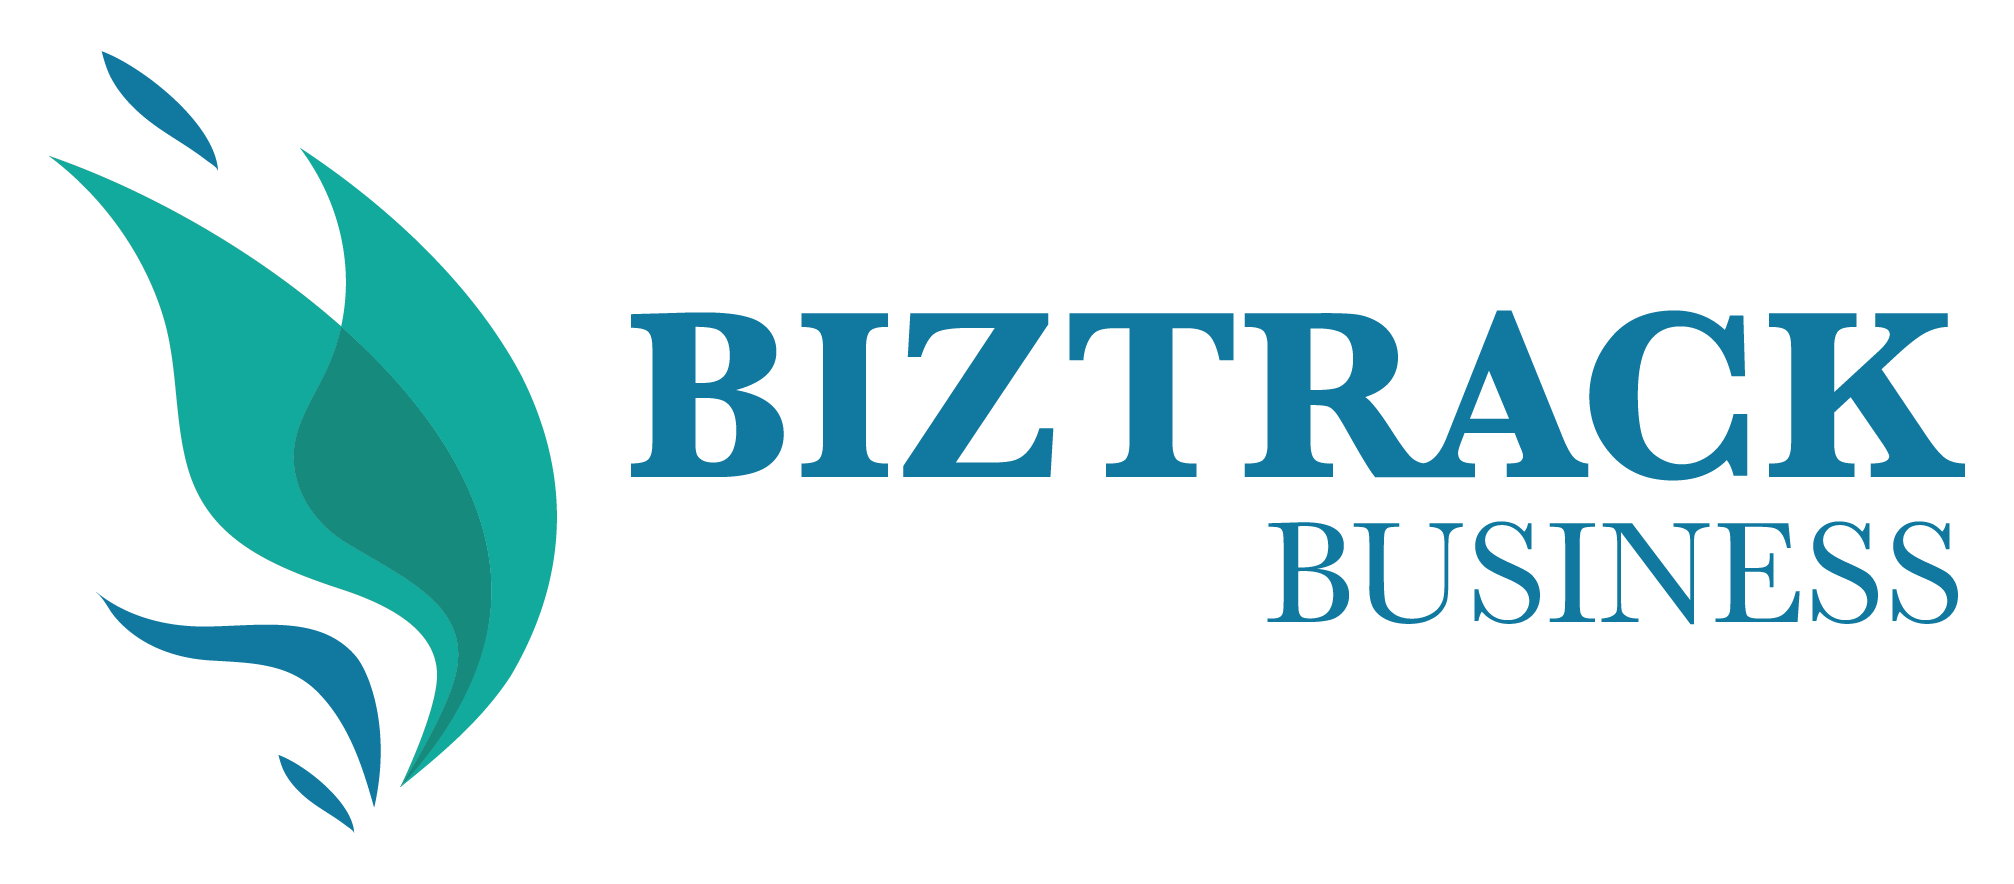 Business Setup In Dubai, UAE With - BizTrack